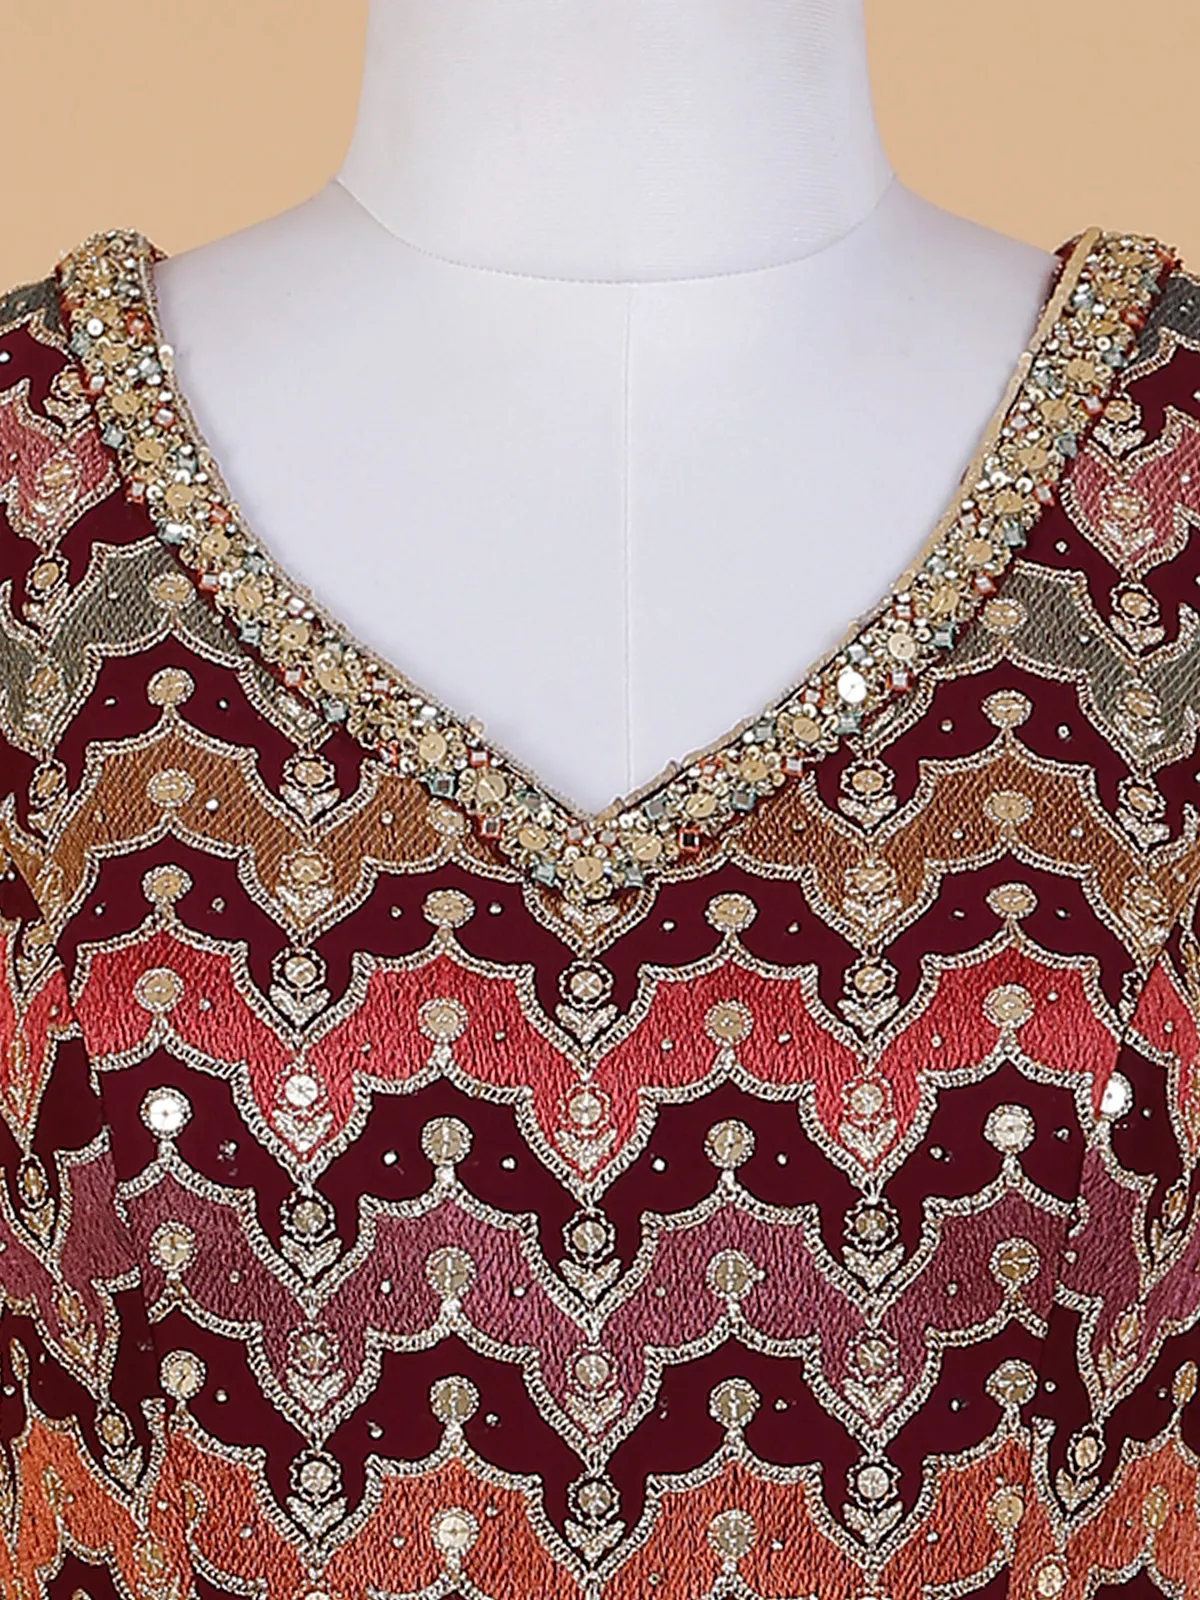 Amazing maroon embroidery anarkali suit